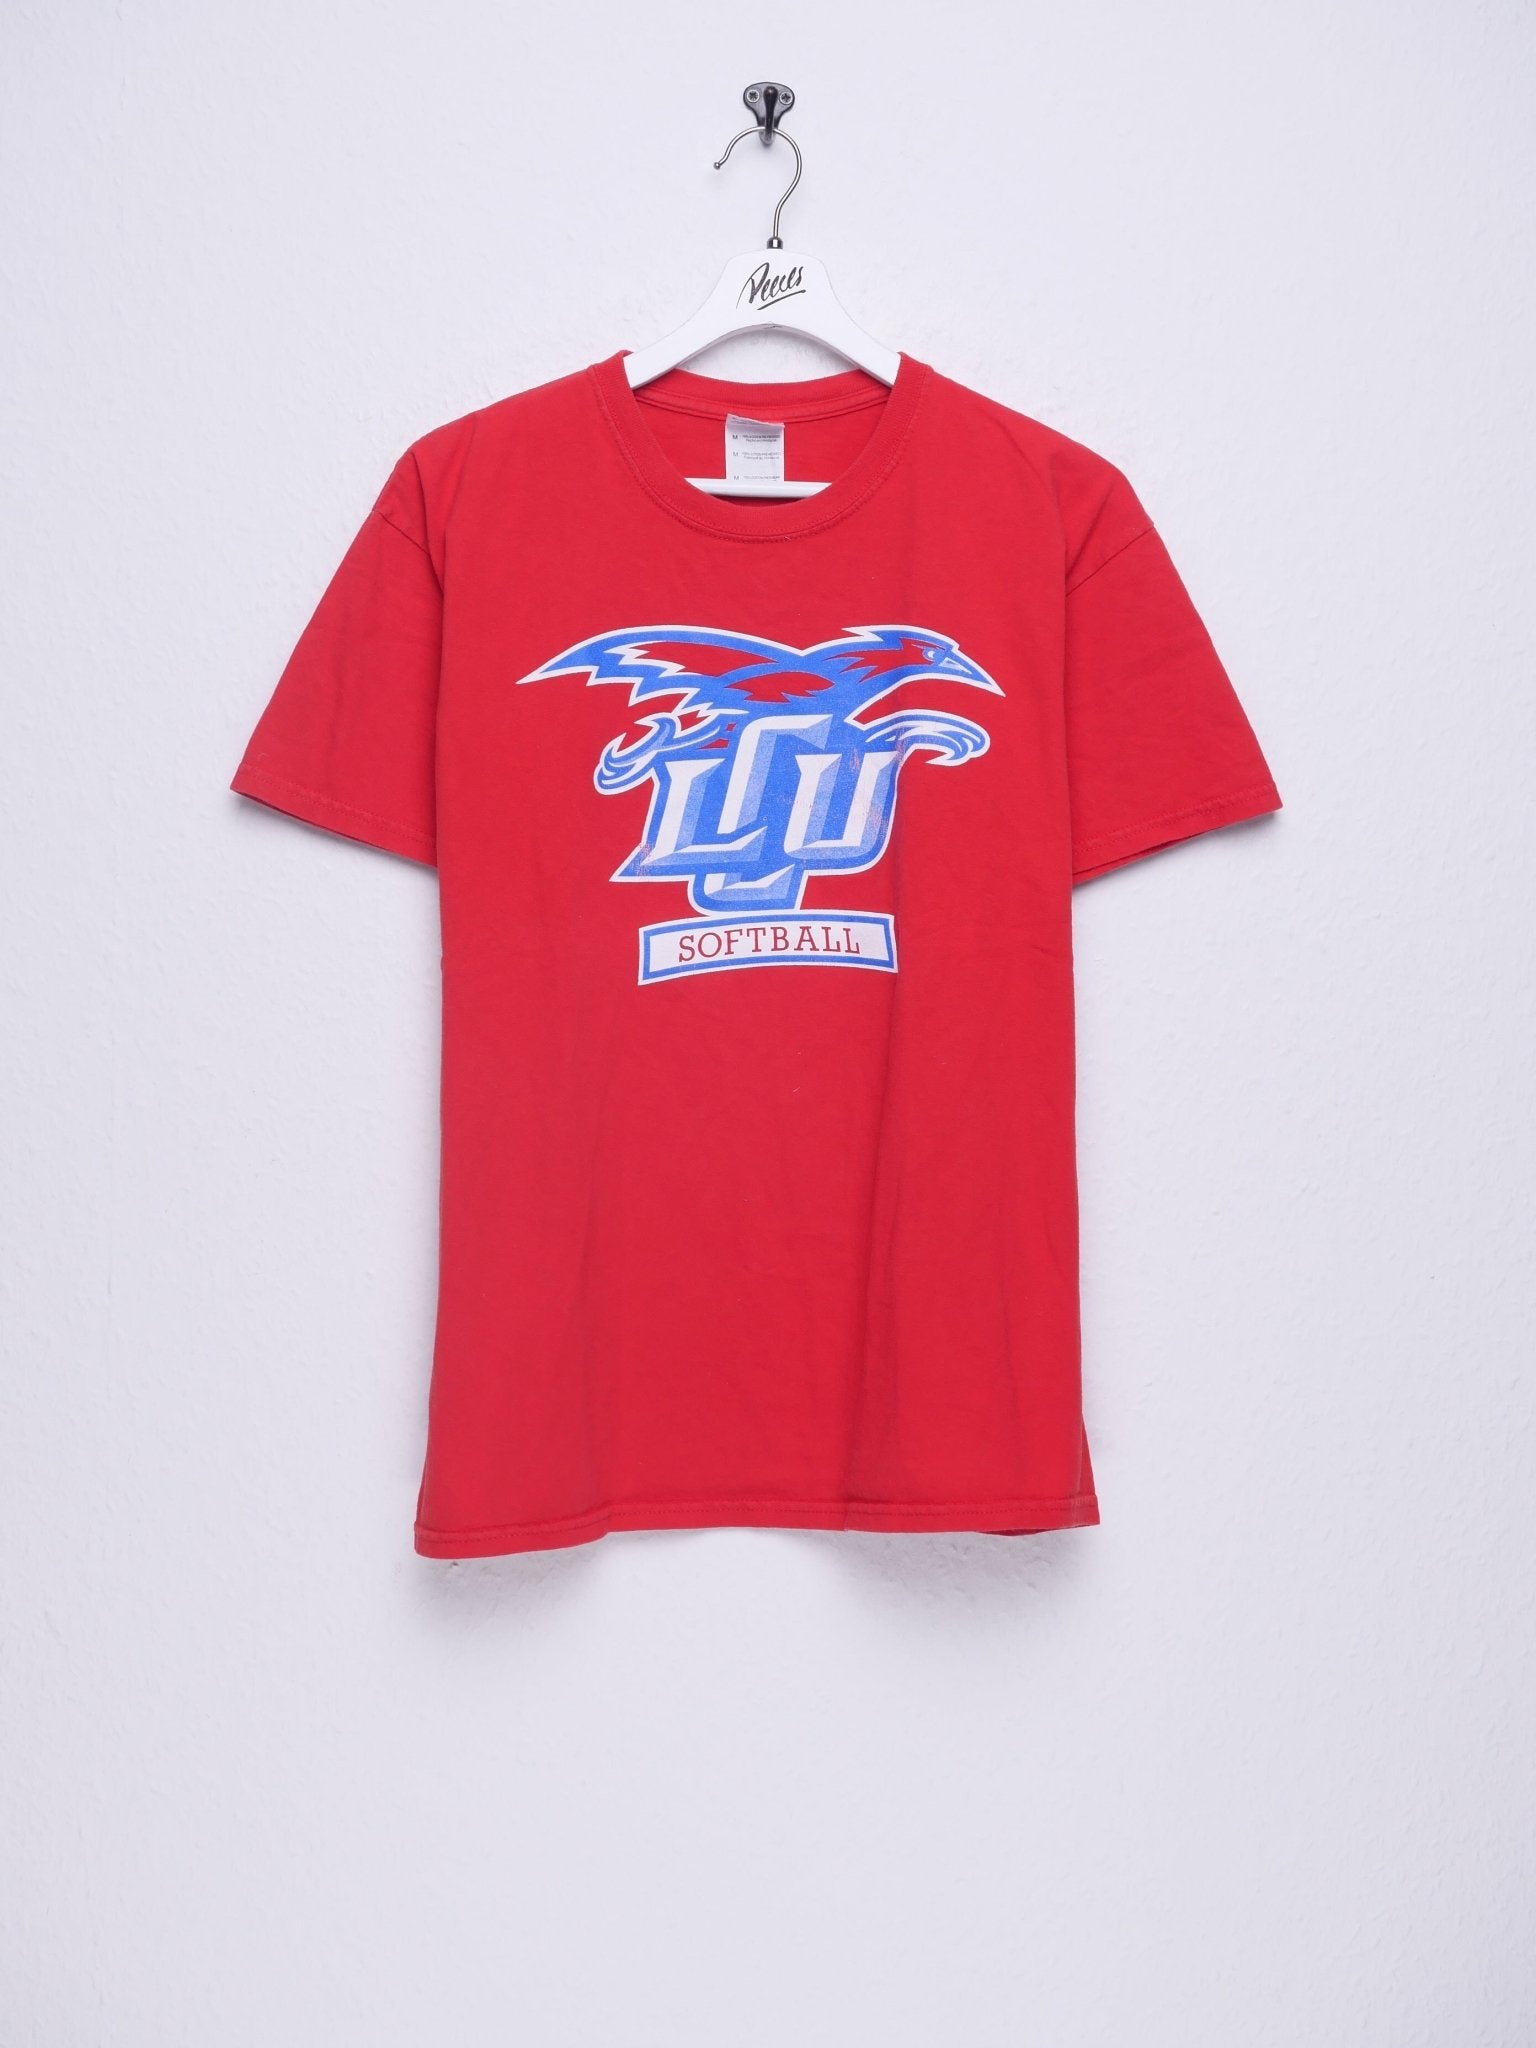 Softball printed Logo red Shirt - Peeces